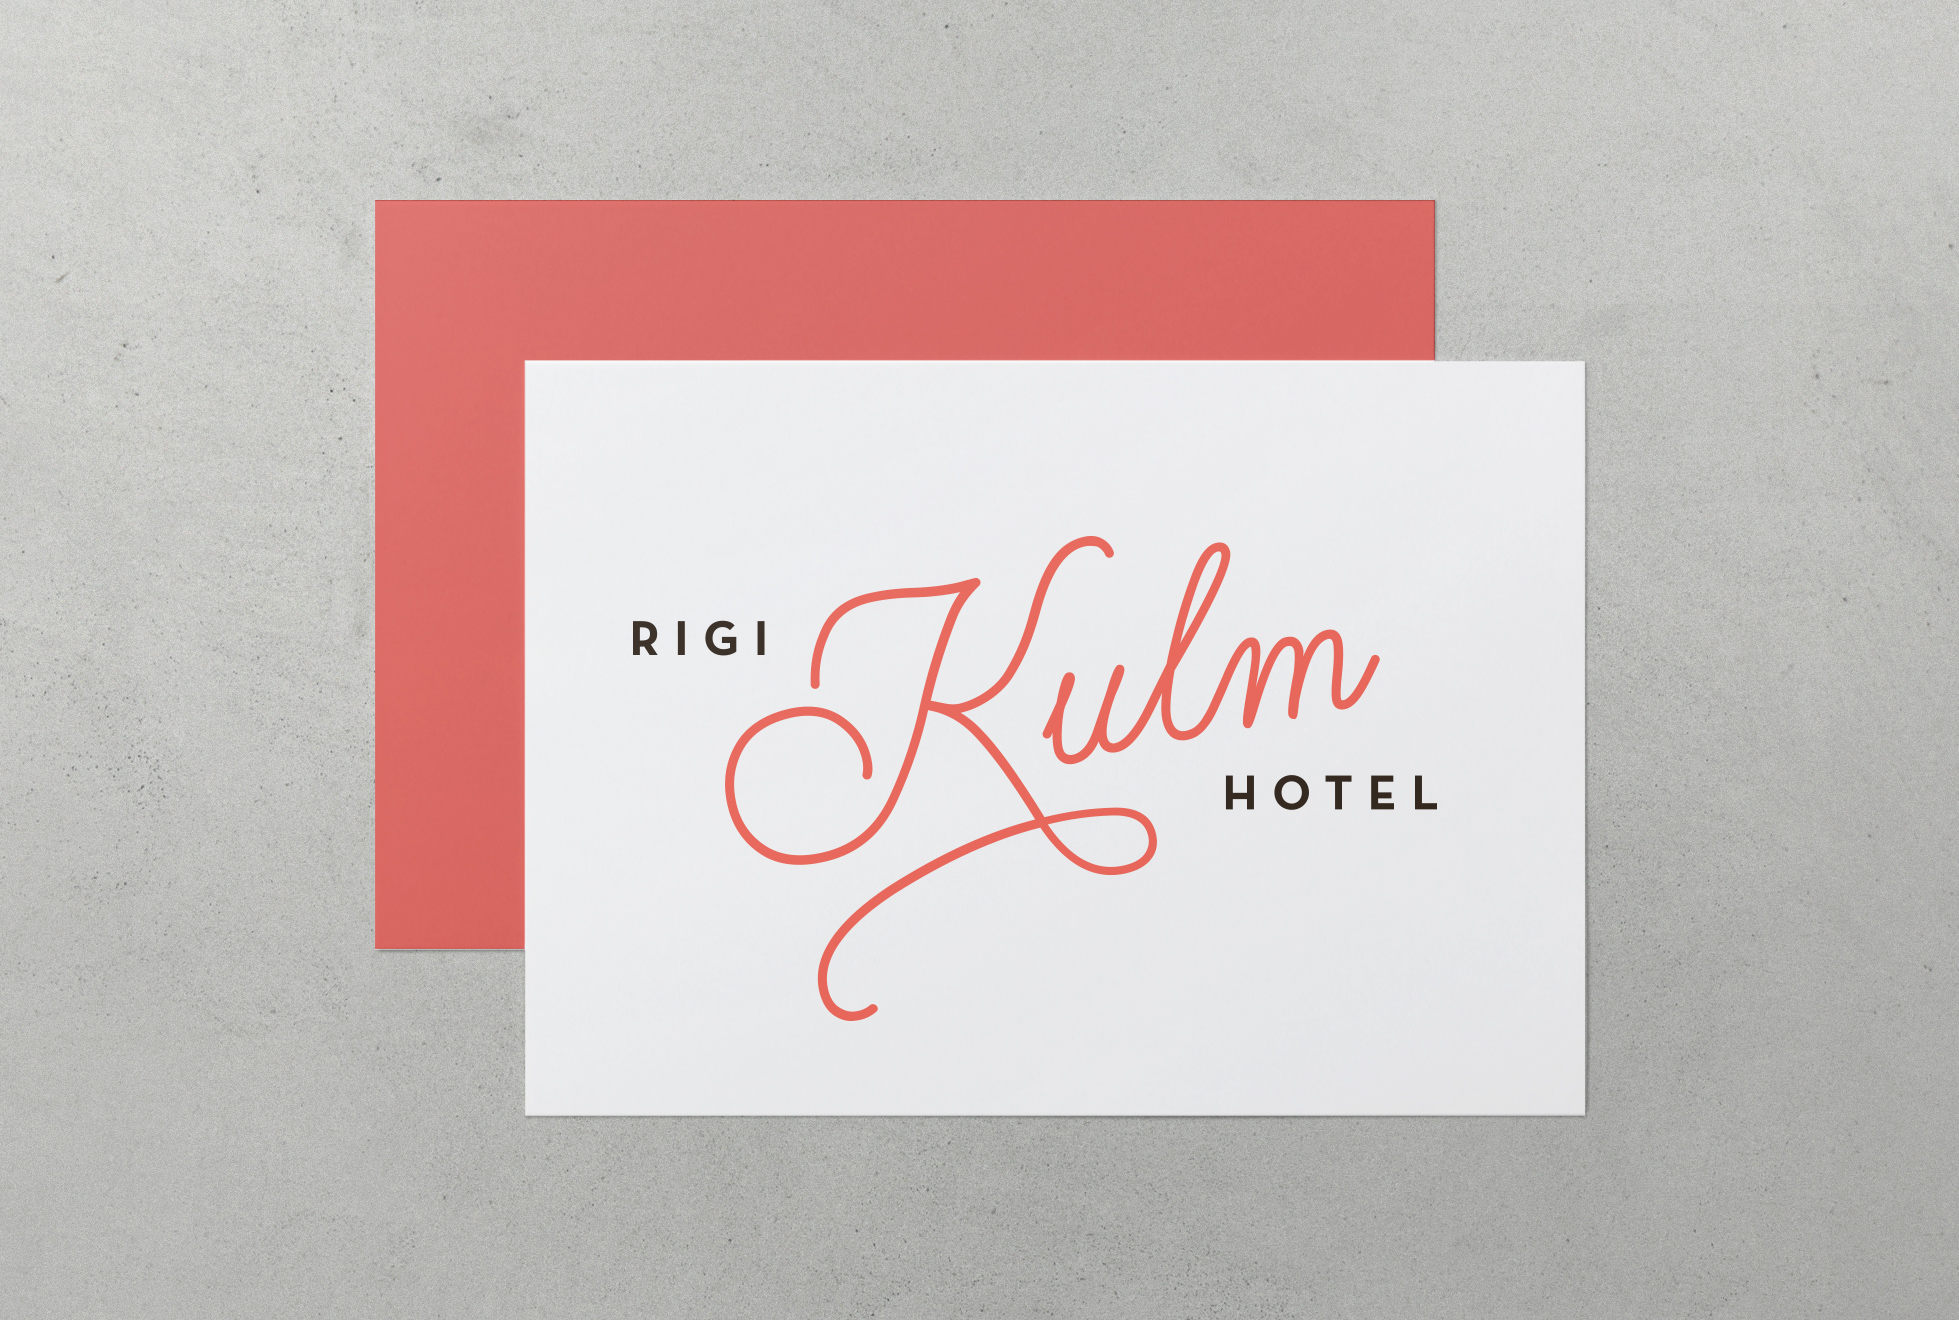 Rigi Kulm Hotel CI/CD by Werbeagentur Bern - Blitz & Donner